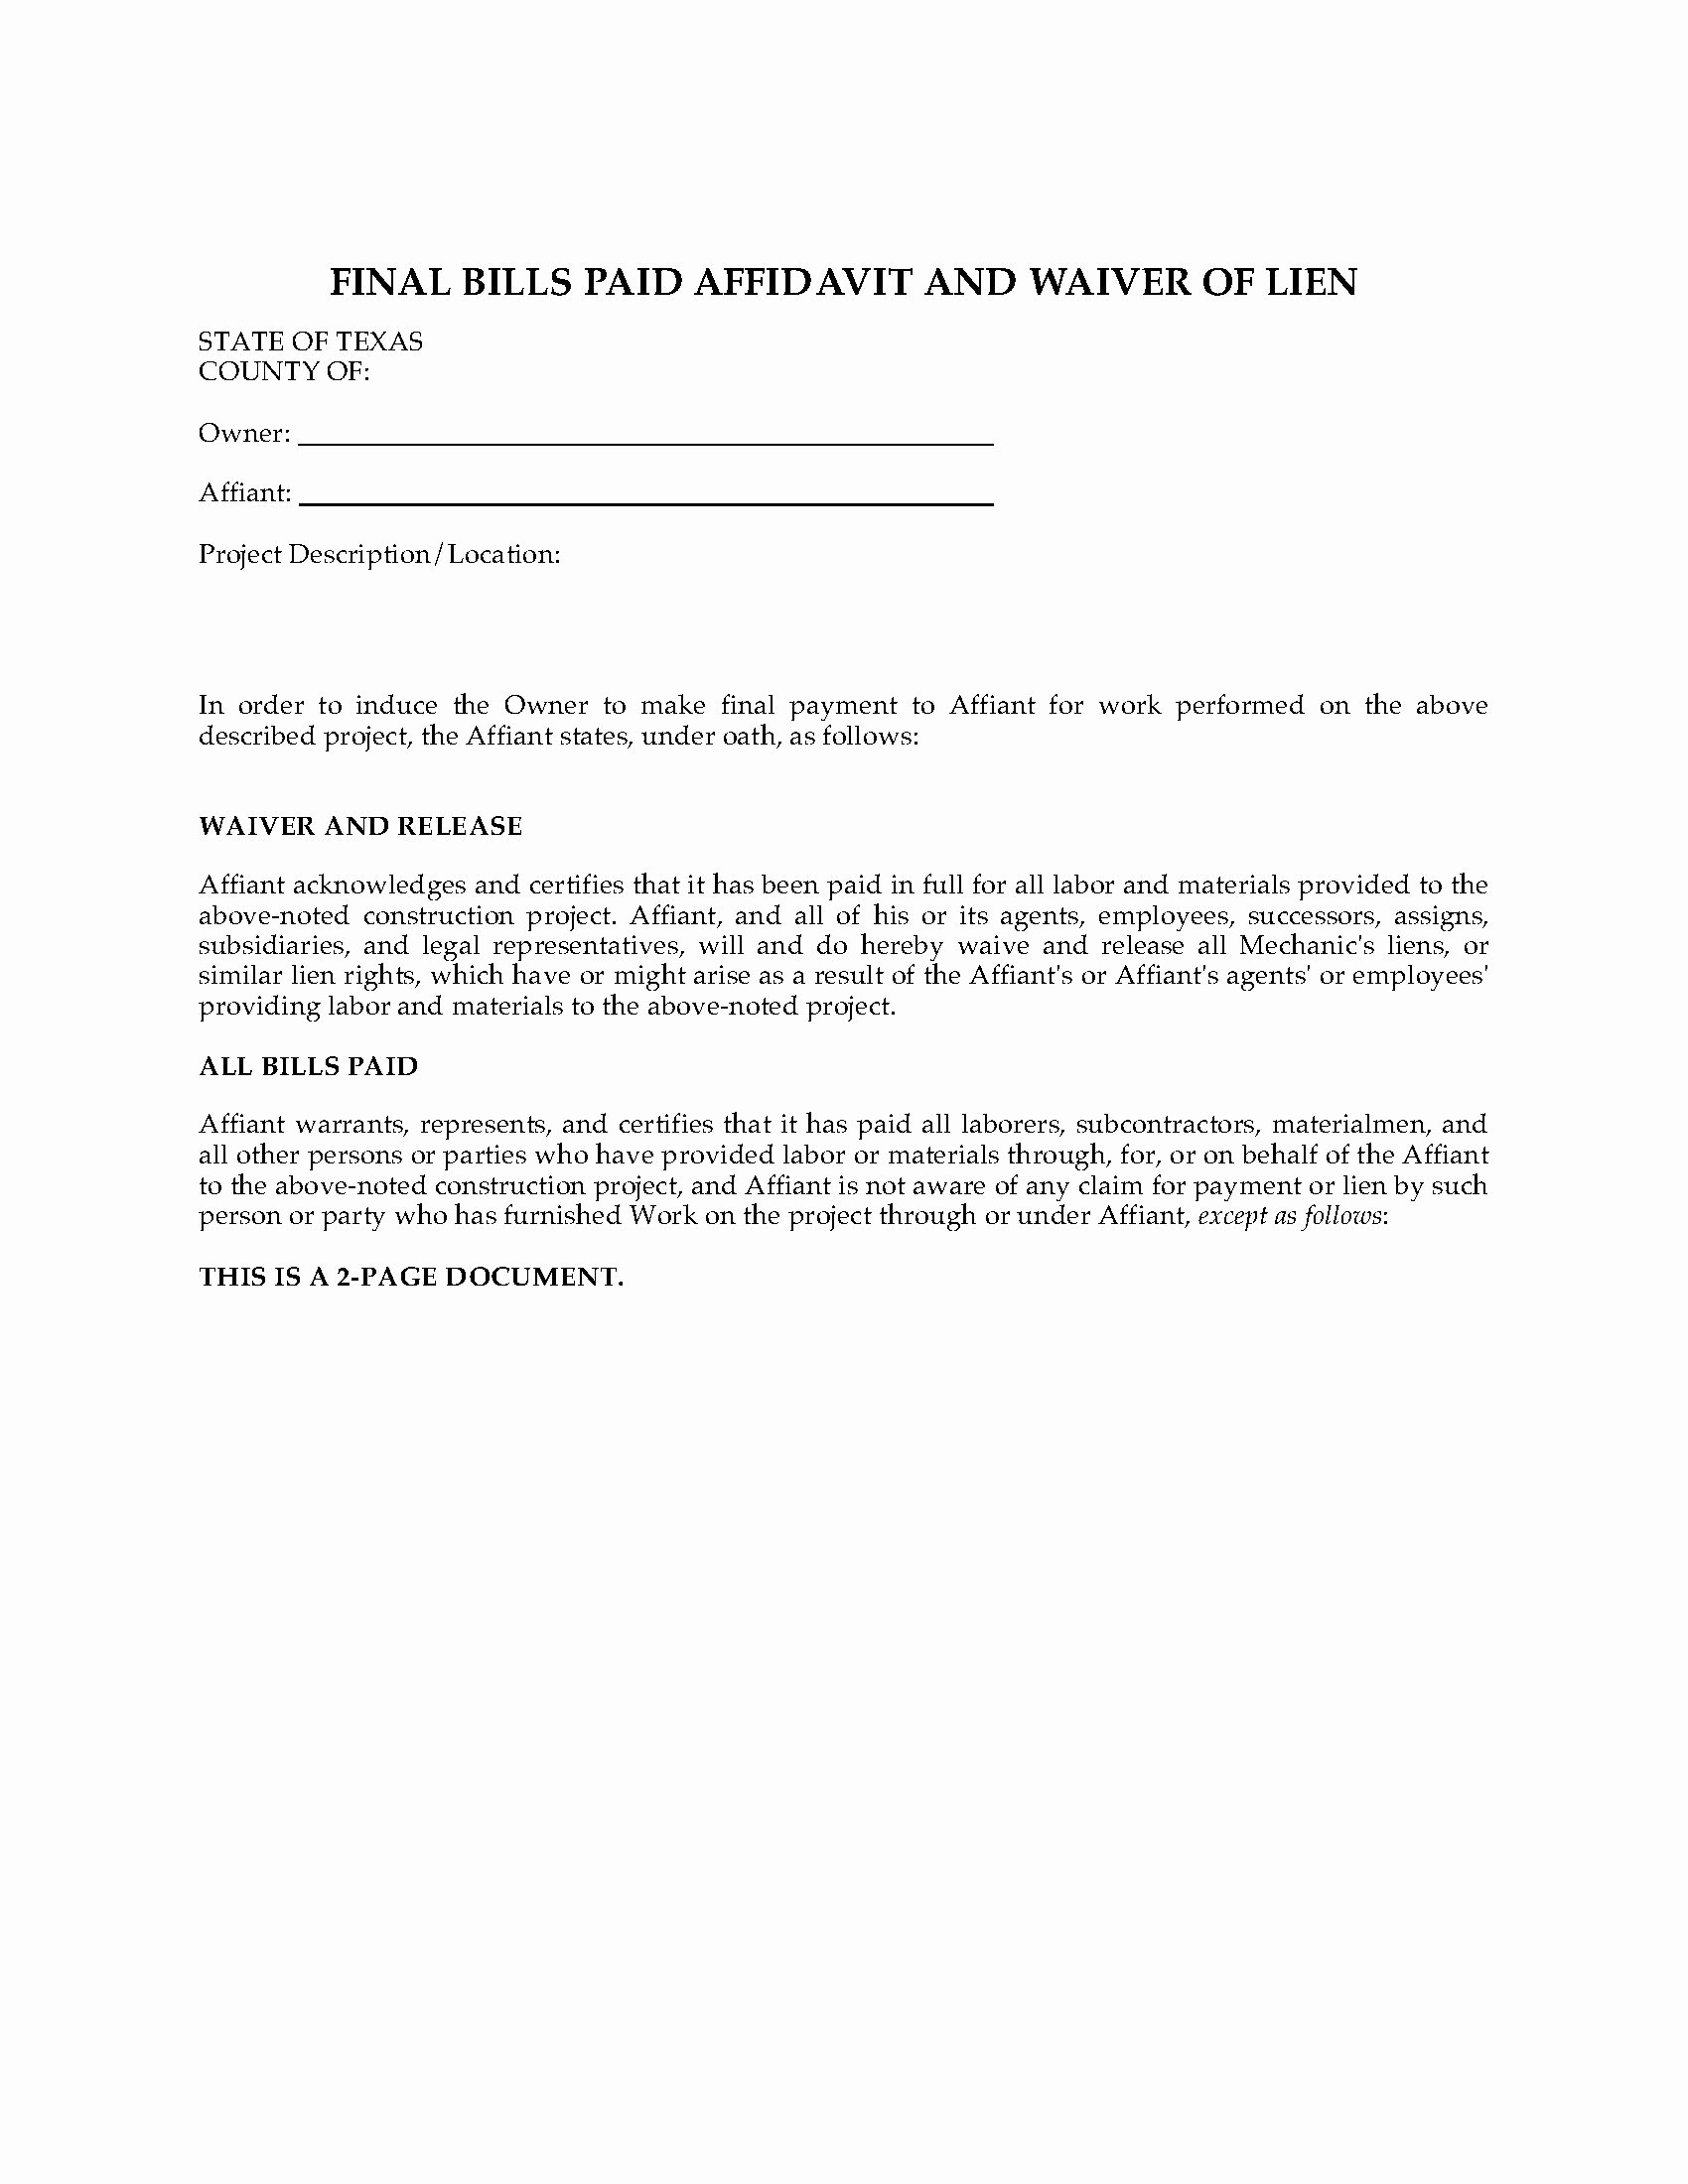 Final Lien Waiver Template Lovely Texas Final Bills Paid Affidavit and Waiver Of Lien